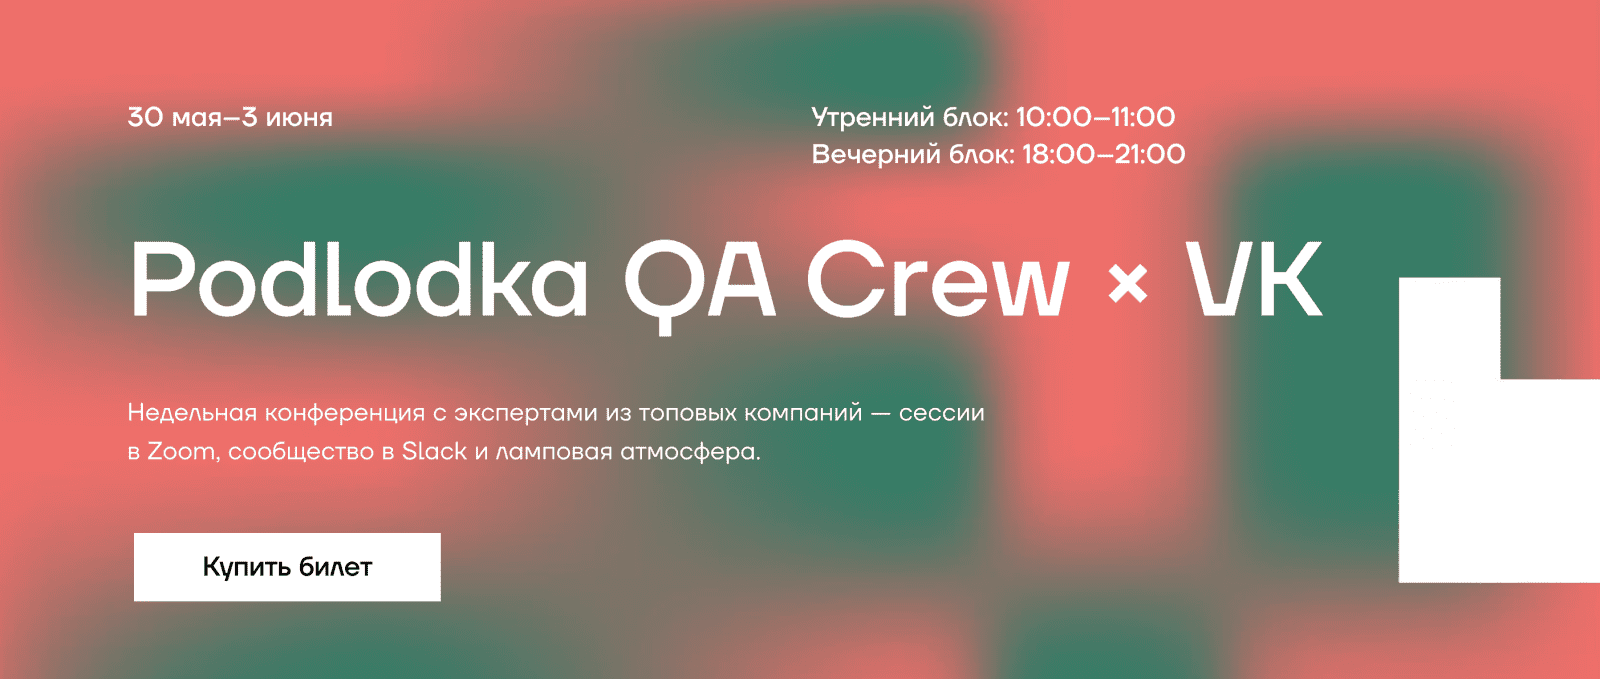 Изображение [Podlodka] Podlodka QA Crew × VK (2022) в посте 255127